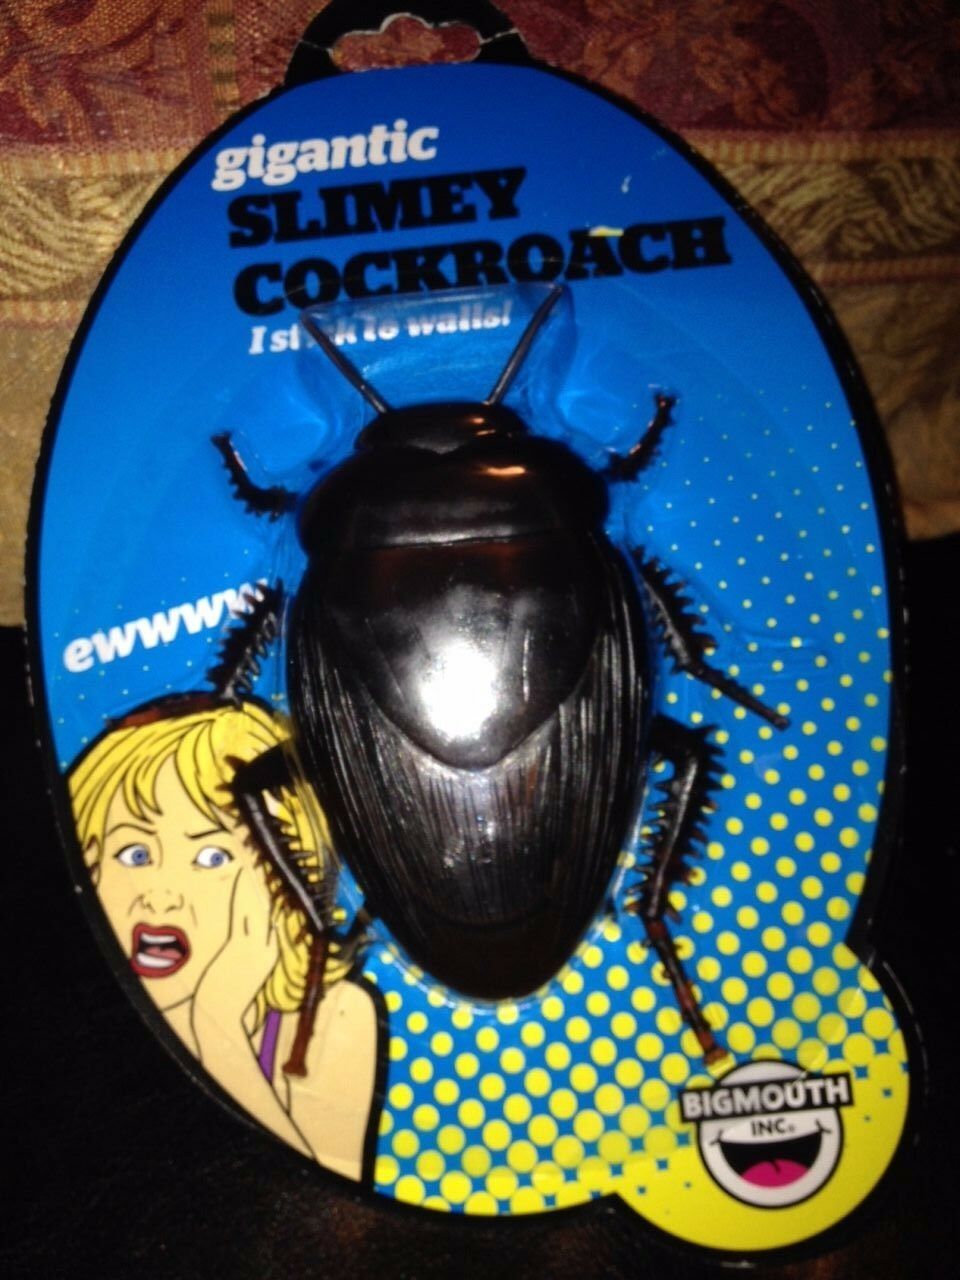 Gigantic Slimey Roach - Huge Realistic Slimy Looking Roach - Sticks To Walls!